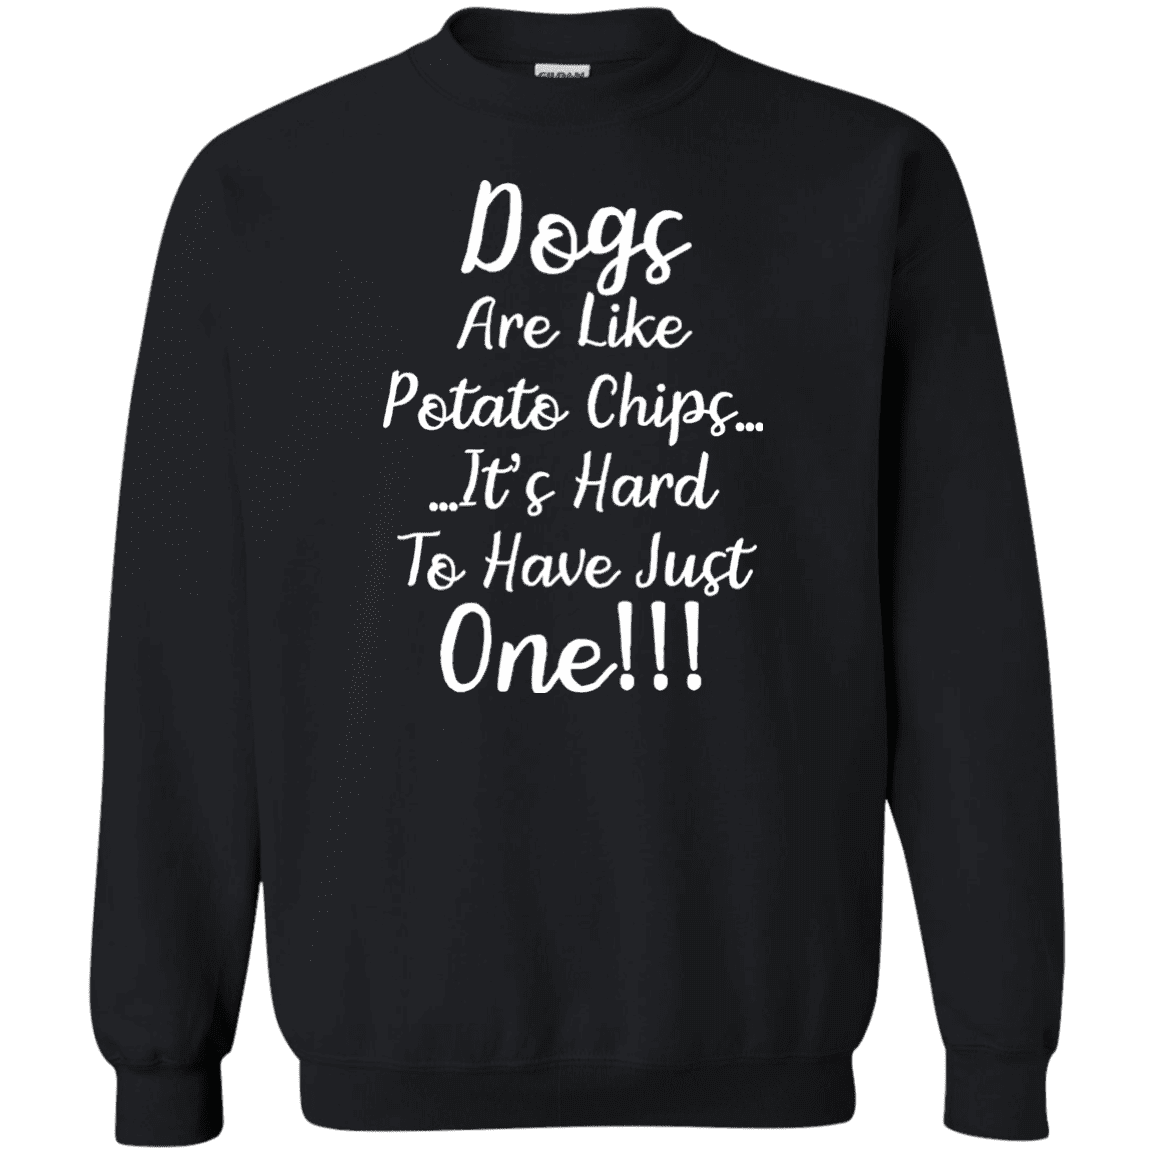 Dogs Are Like Potato Chips - Sweatshirt.